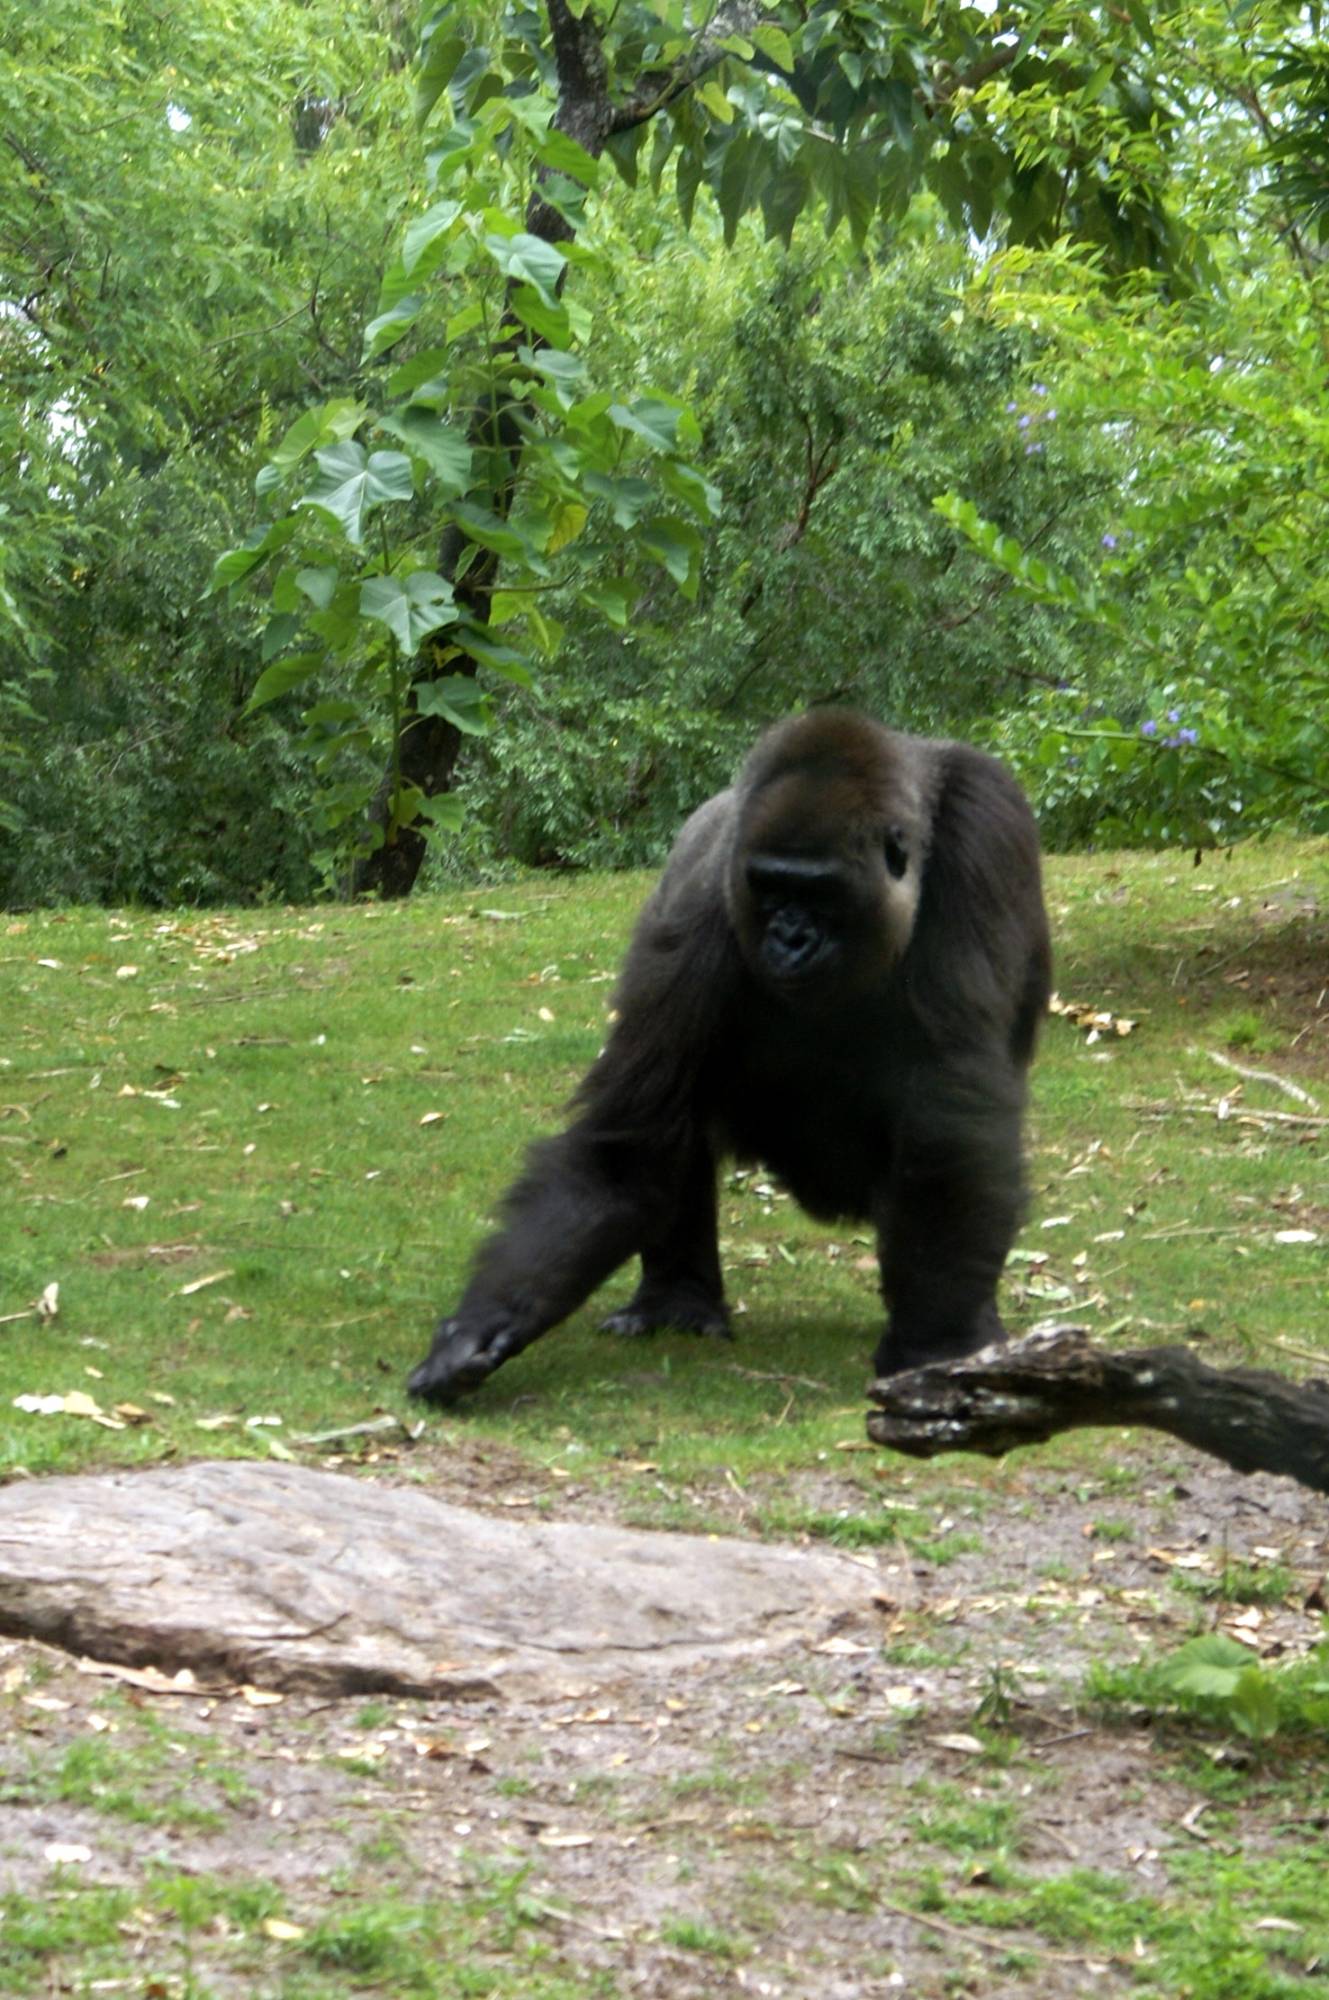 Female/Momma Gorilla 4